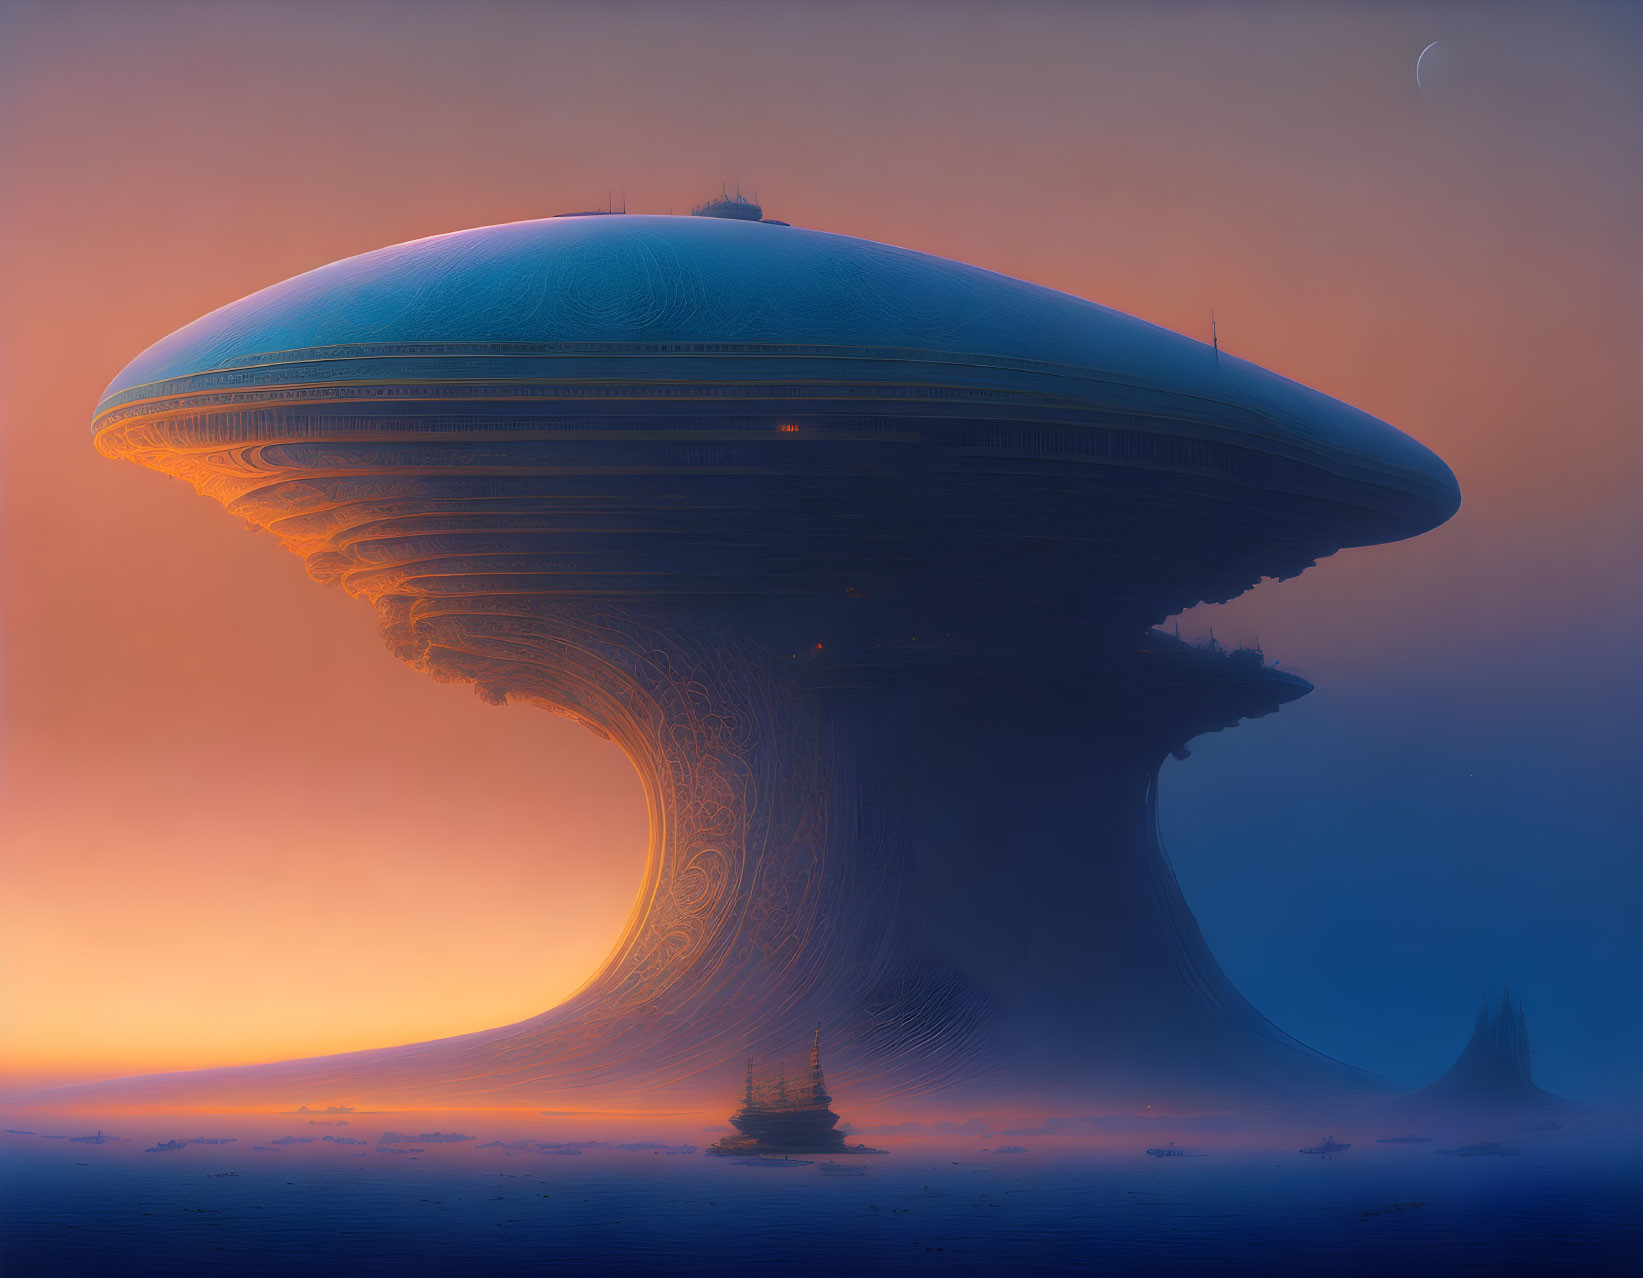 Giant Mushroom Structure Under Orange-Blue Sky